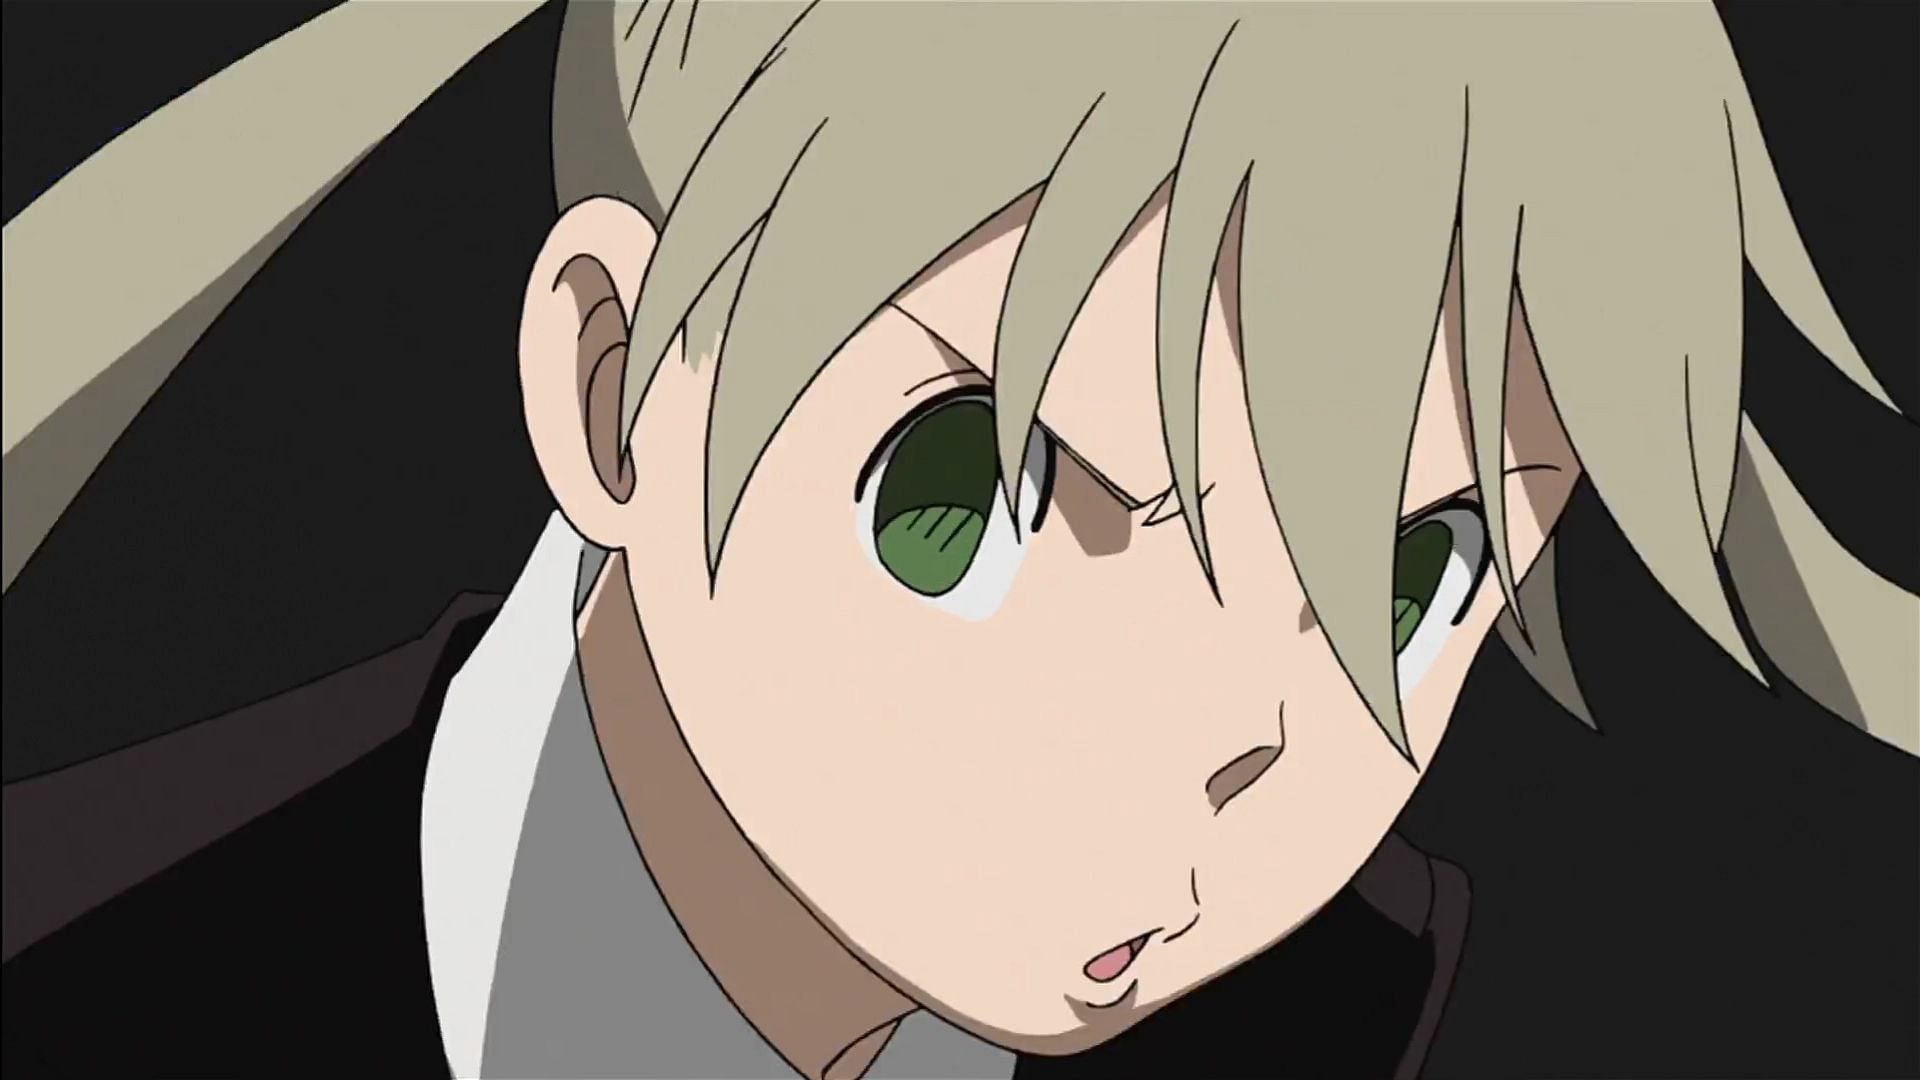 Still image of Maka Albarn from the anime series (Image via Studio Bones)